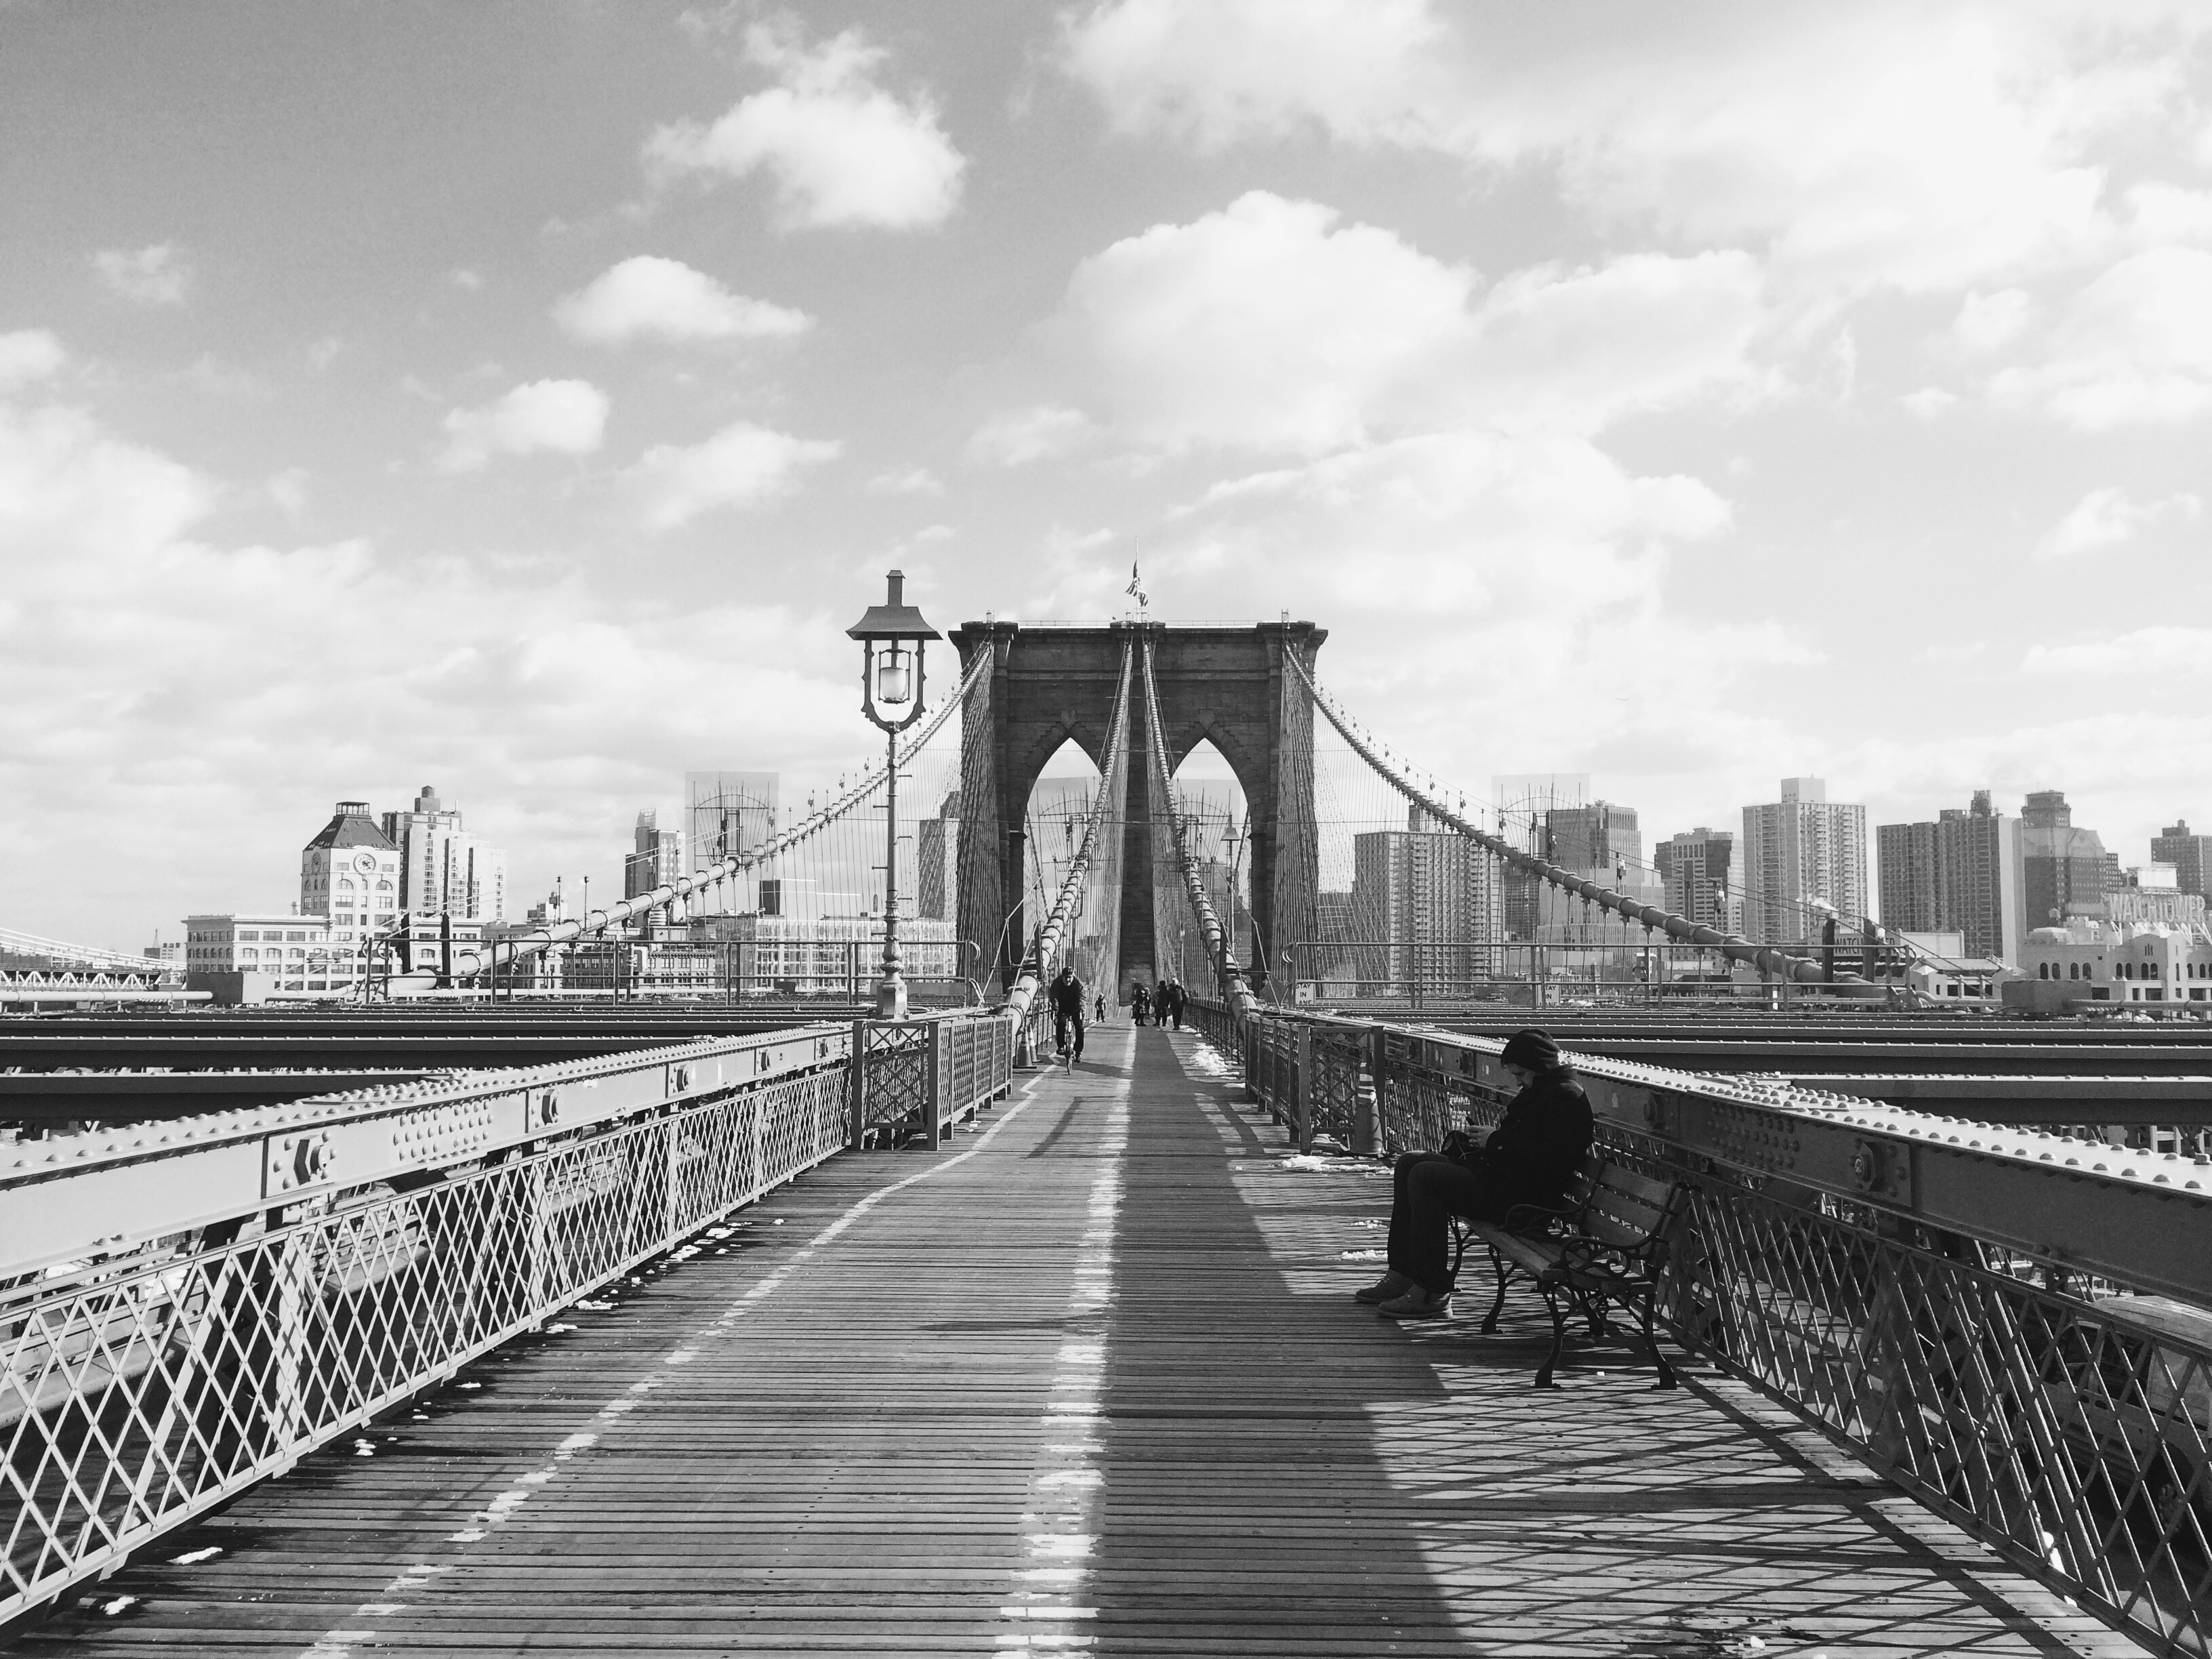 grayscale photo of man sitting on bench on bridge